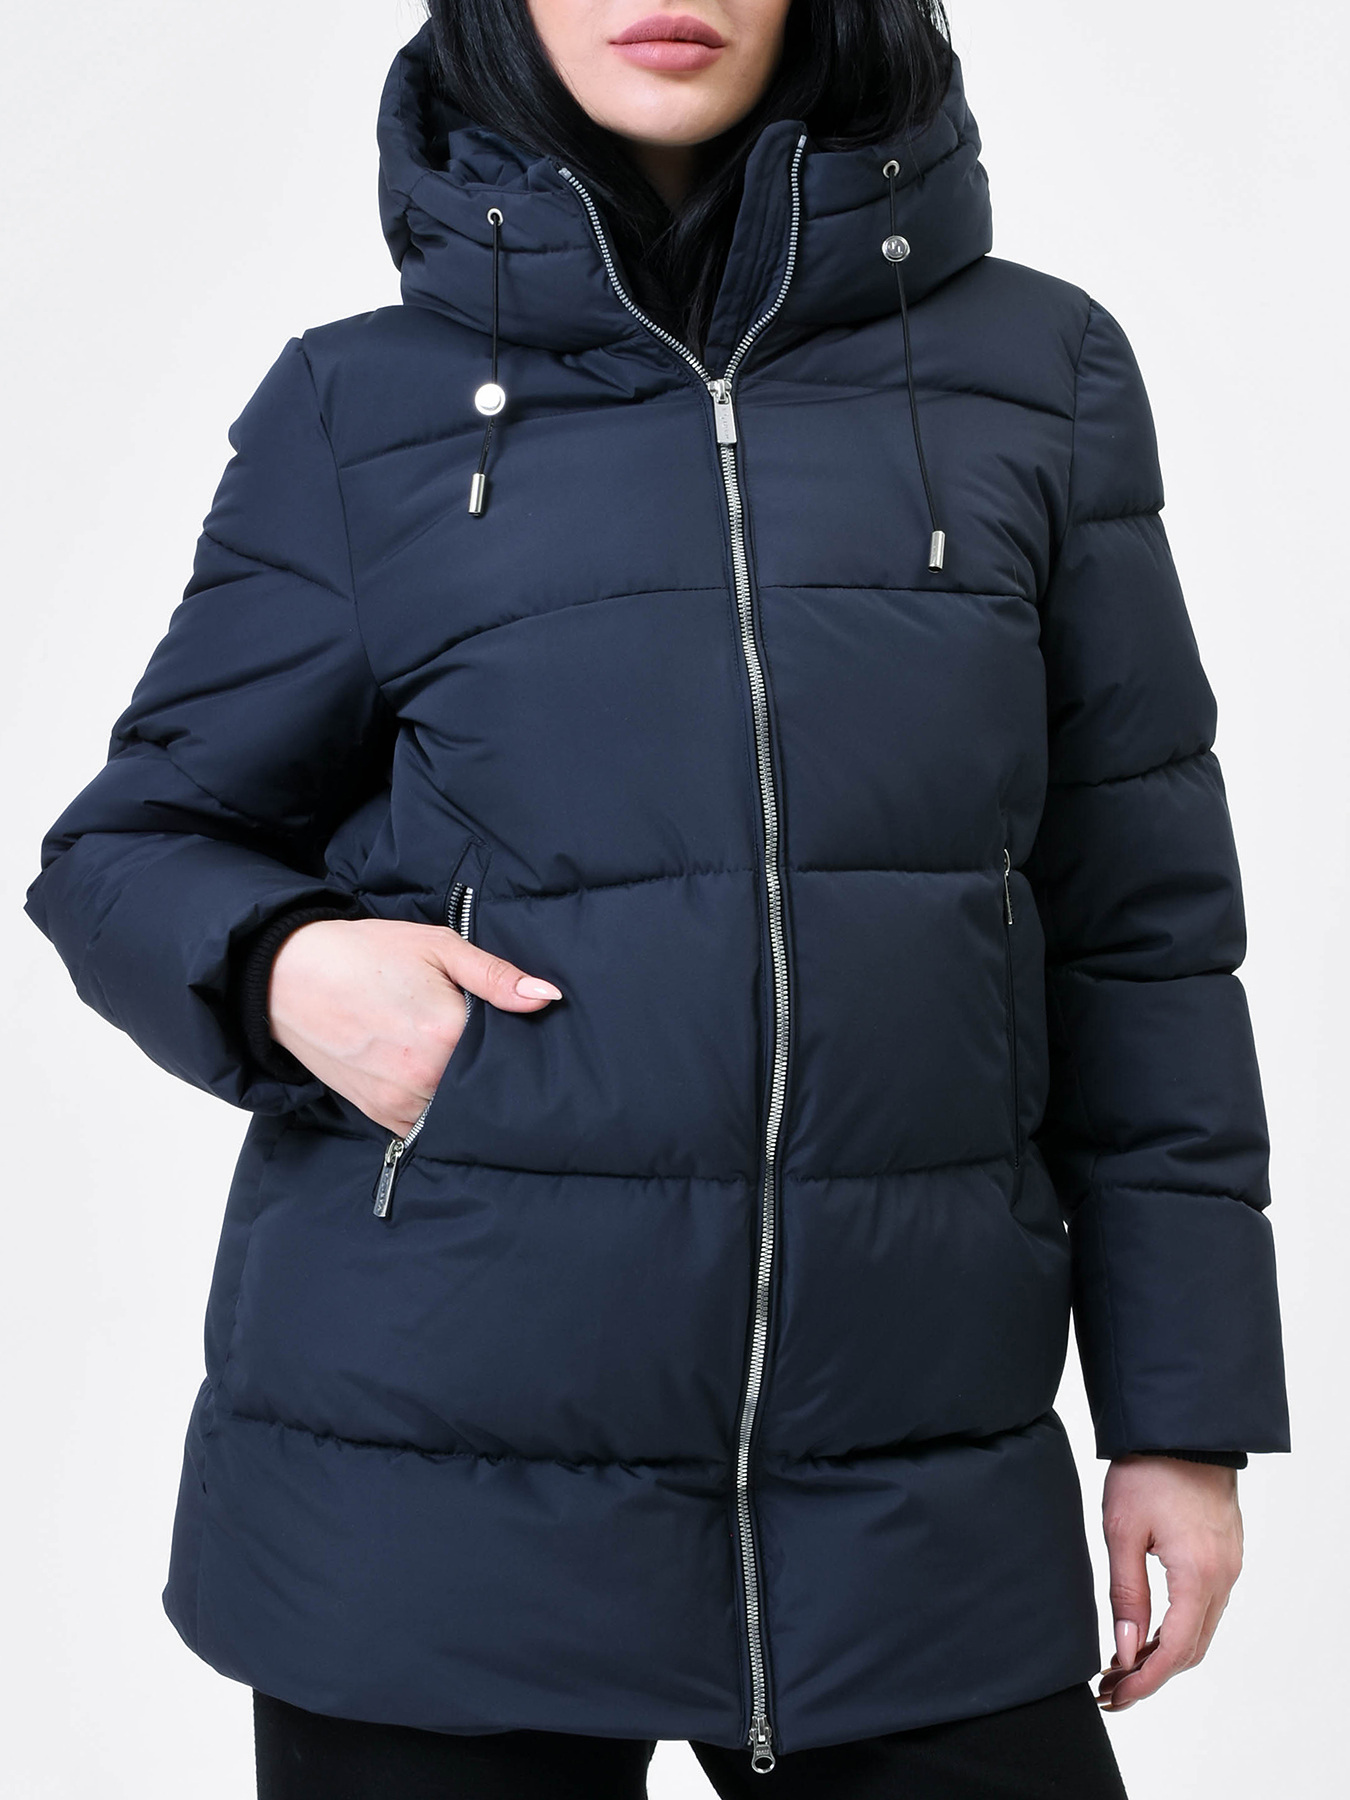 Пальто зимнее Maritta 433612-020, цвет темно-синий, размер 44